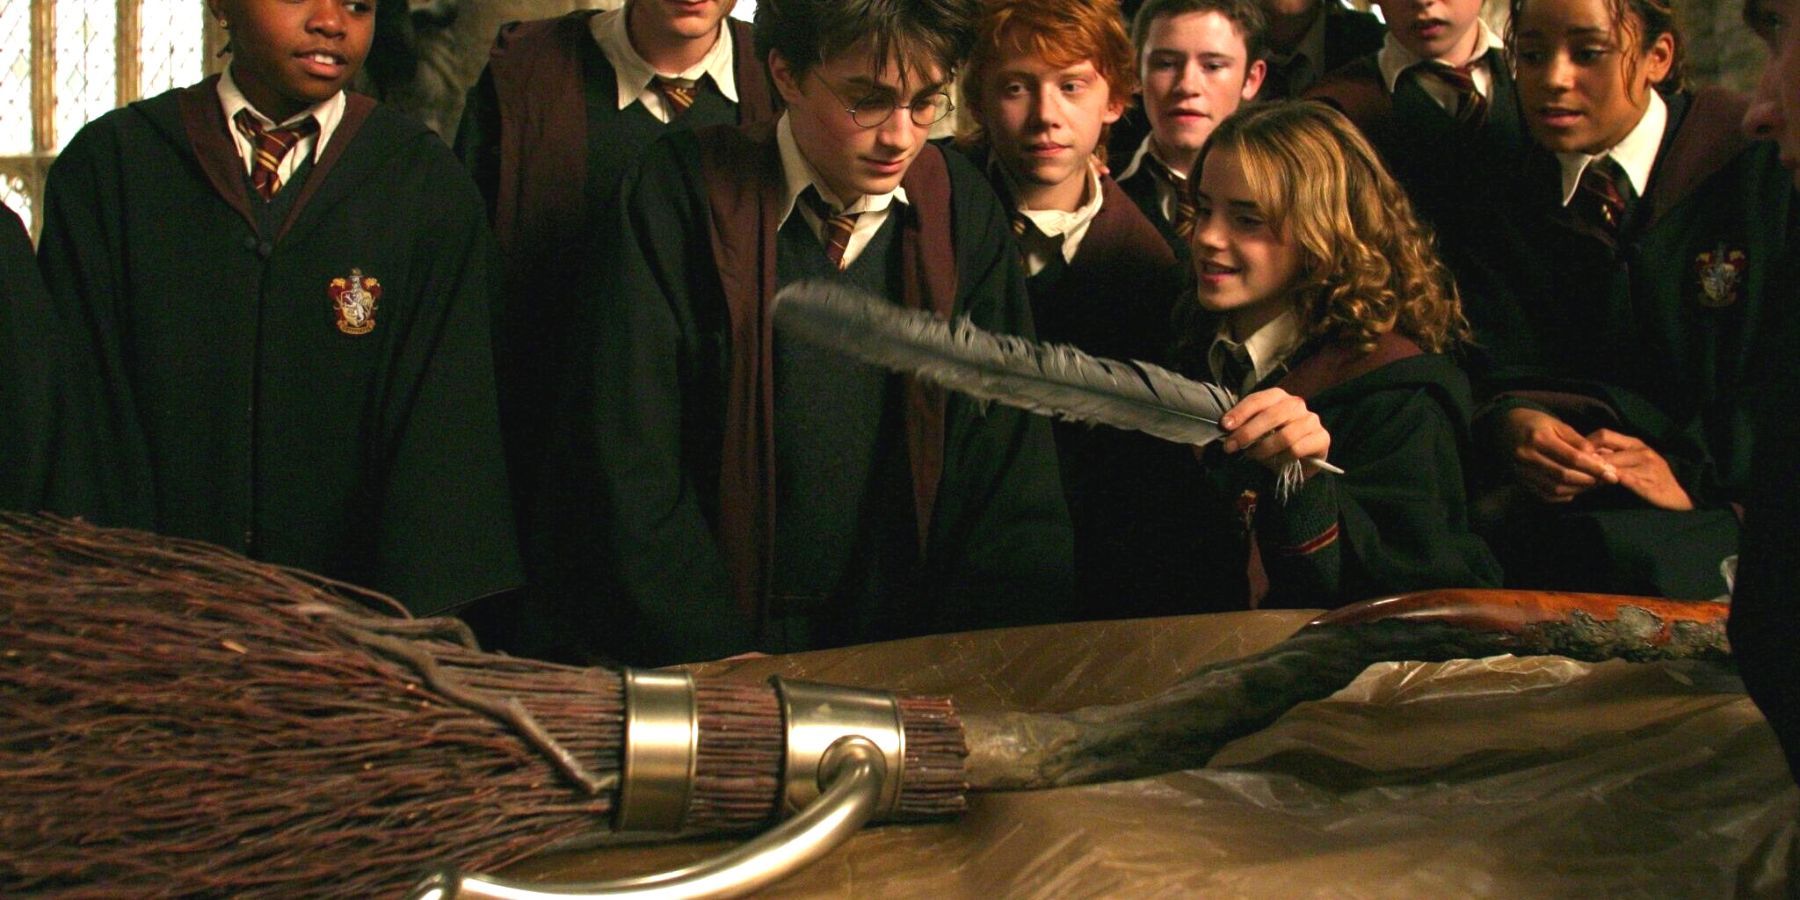 Firebolt broom in Harry Potter and the Prisoner of Azkaban